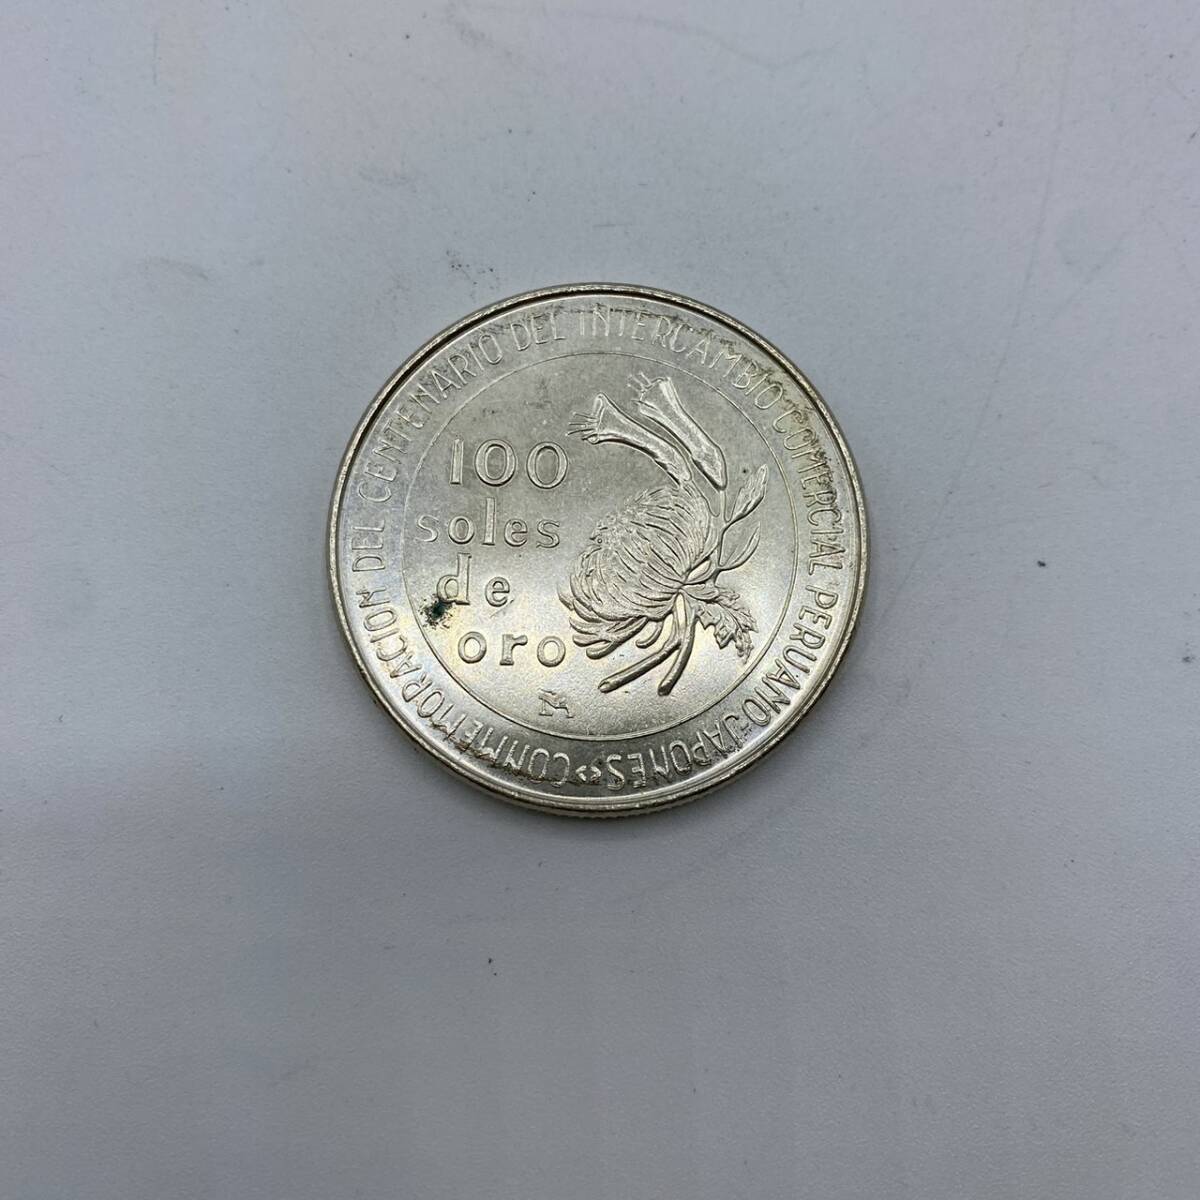 #13451A ペルー 100ソル銀貨 日本ペルー修好100周年記念銀貨 1873-1973年 100soles de oro ペルー銀貨 銀貨の画像1